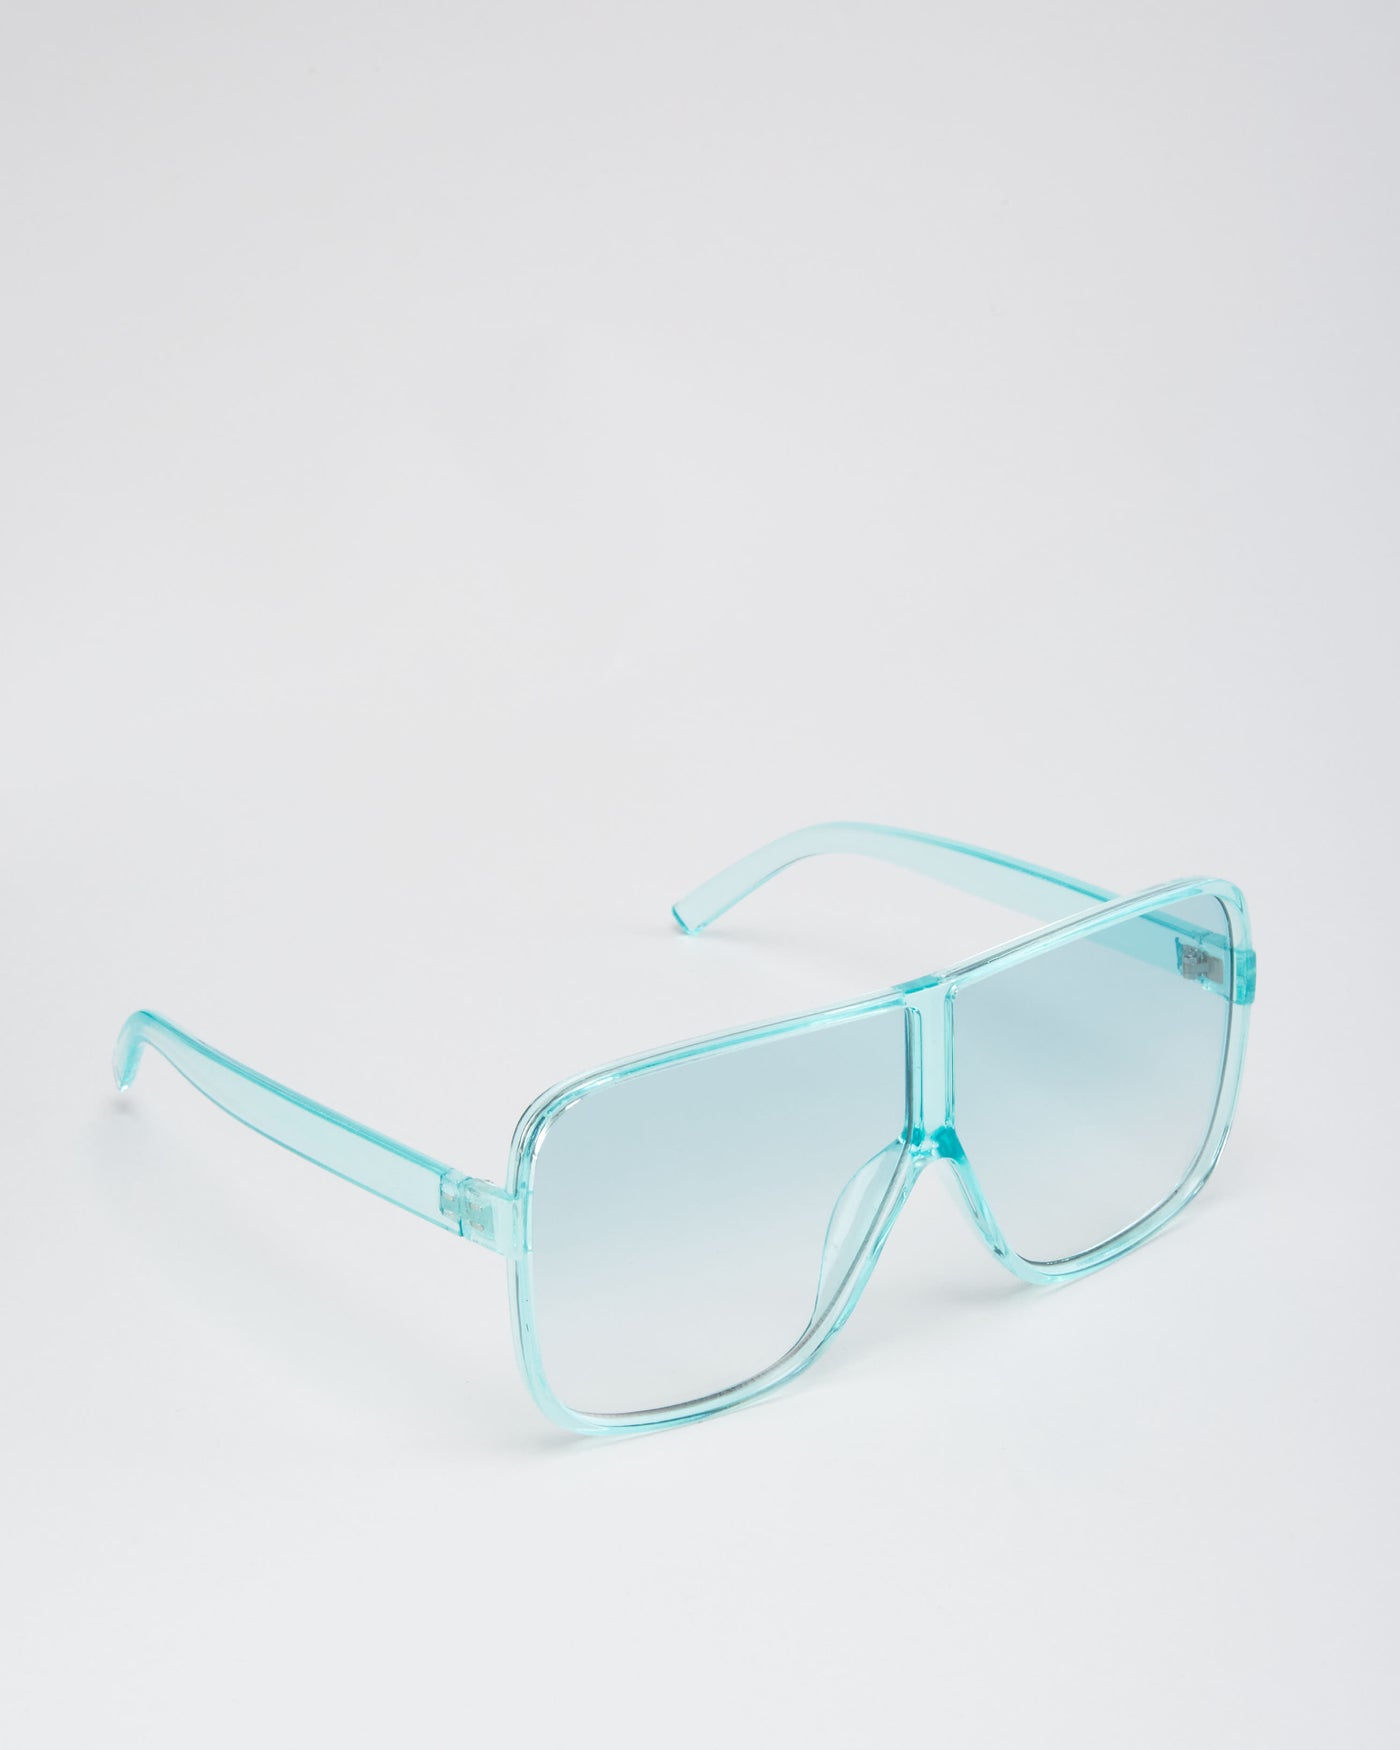 Mondo Blue Sunglasses